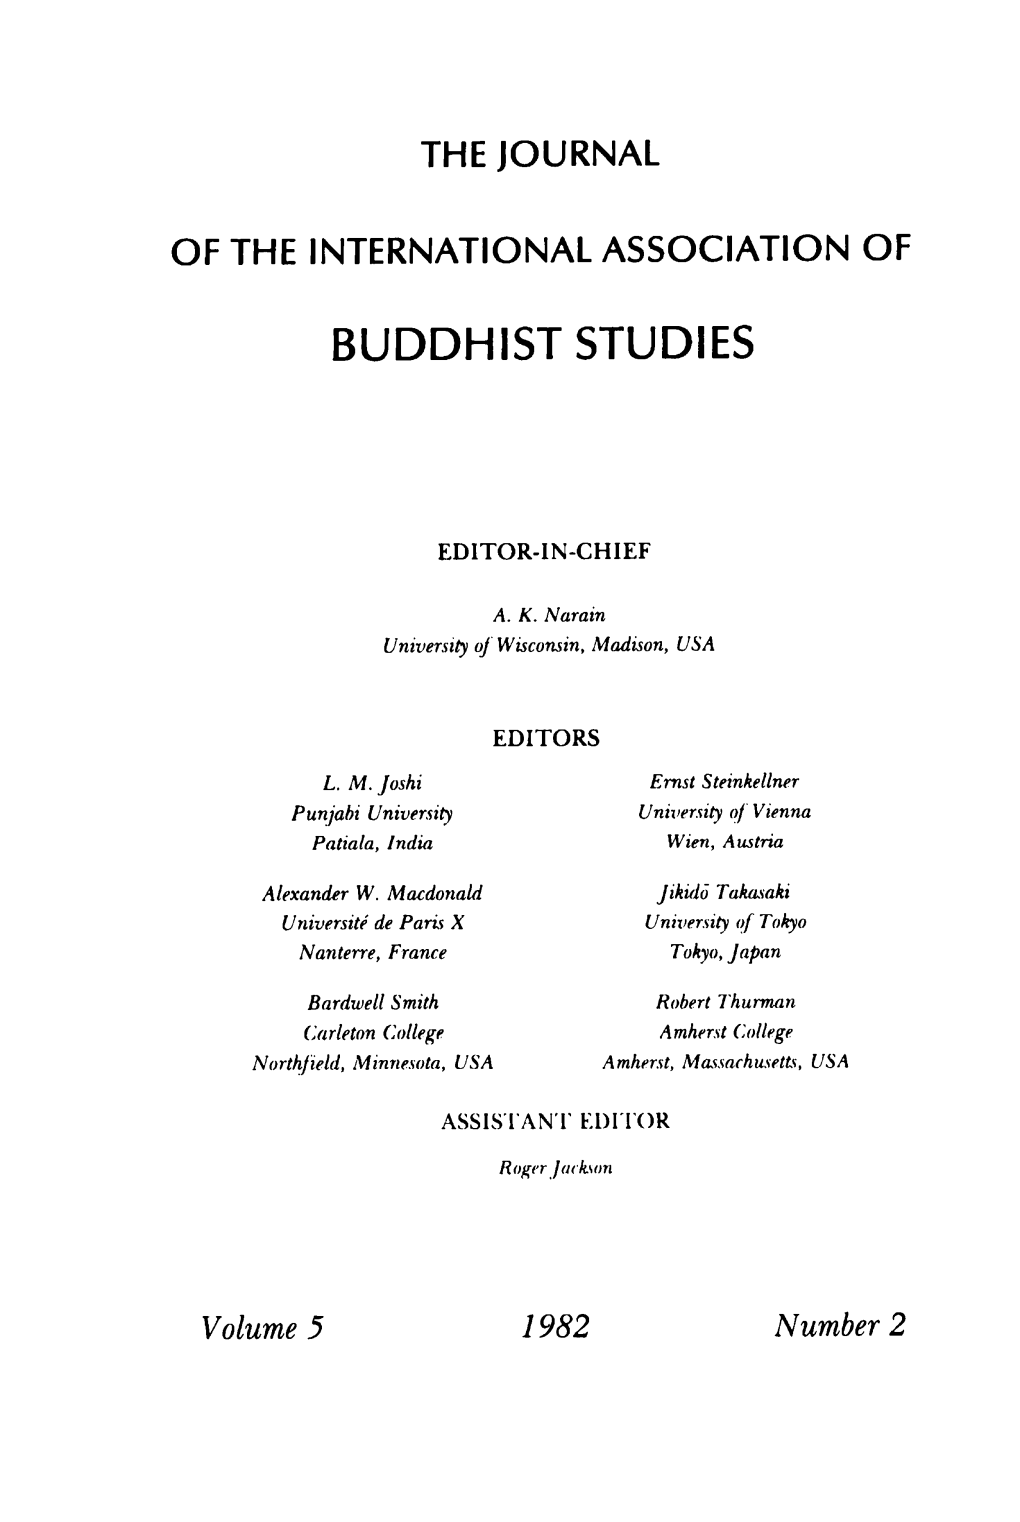 Early Buddhism and the Urban Revolution," by Bal- Krishna Govind Gokhale 7 2